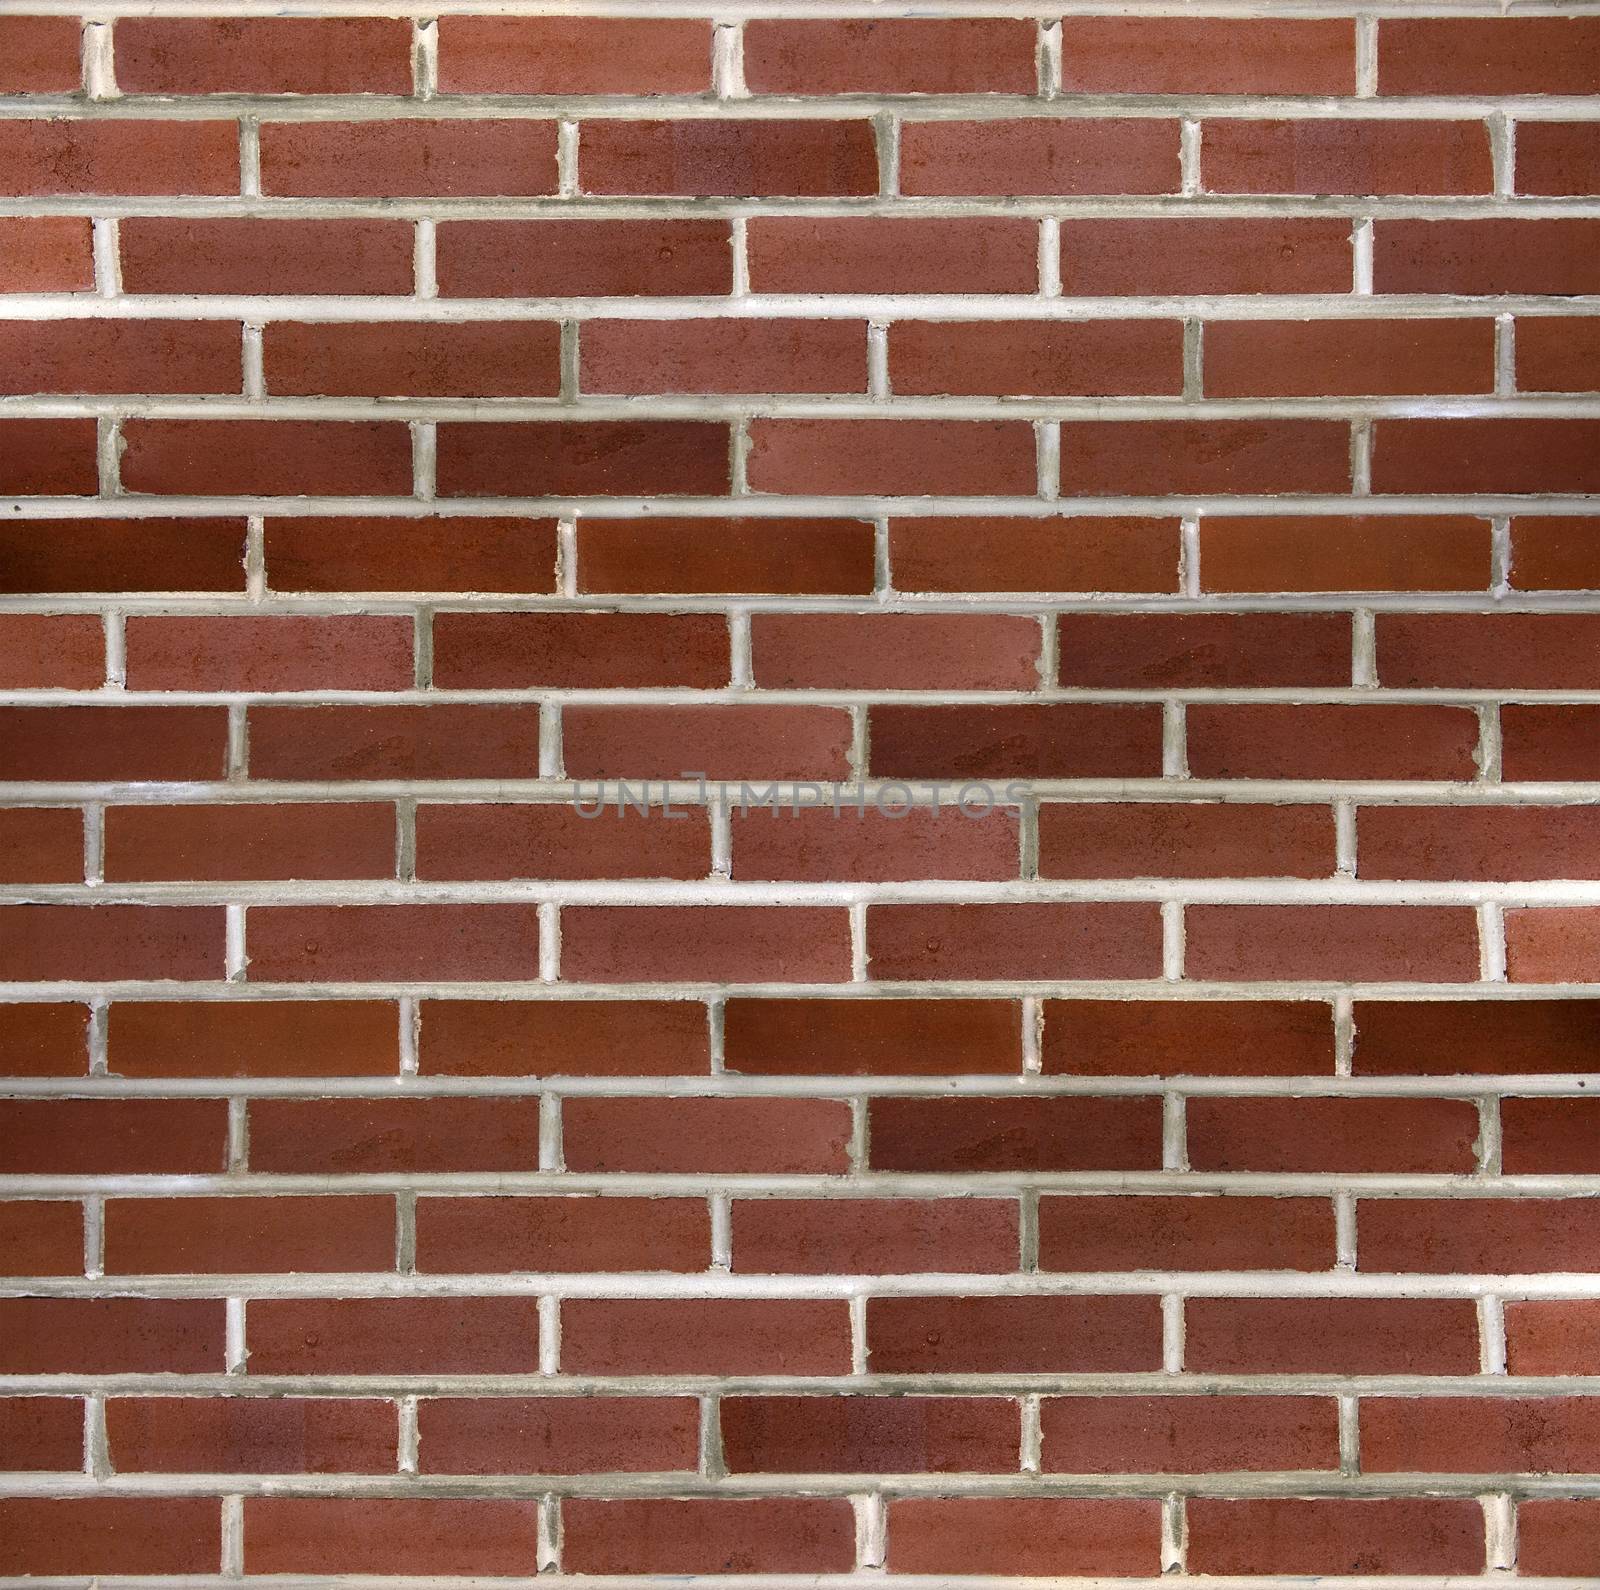 brick wall background by fotoecho